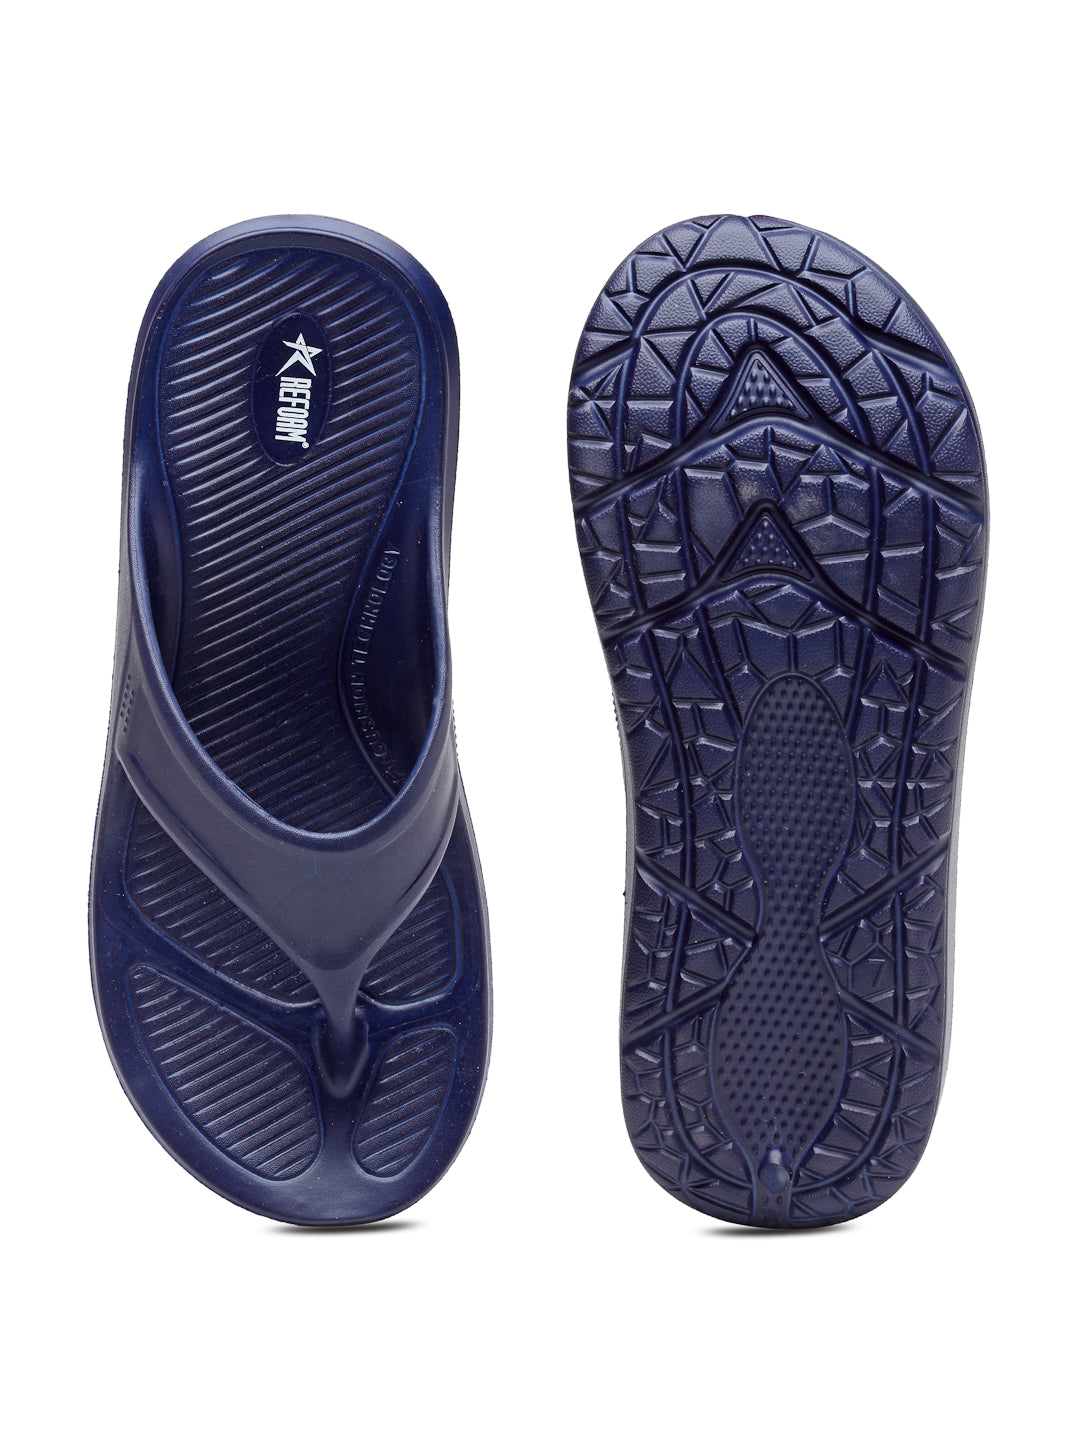 Navy Blue Solid EVA Rubber Slip On Casual Slippers For Men